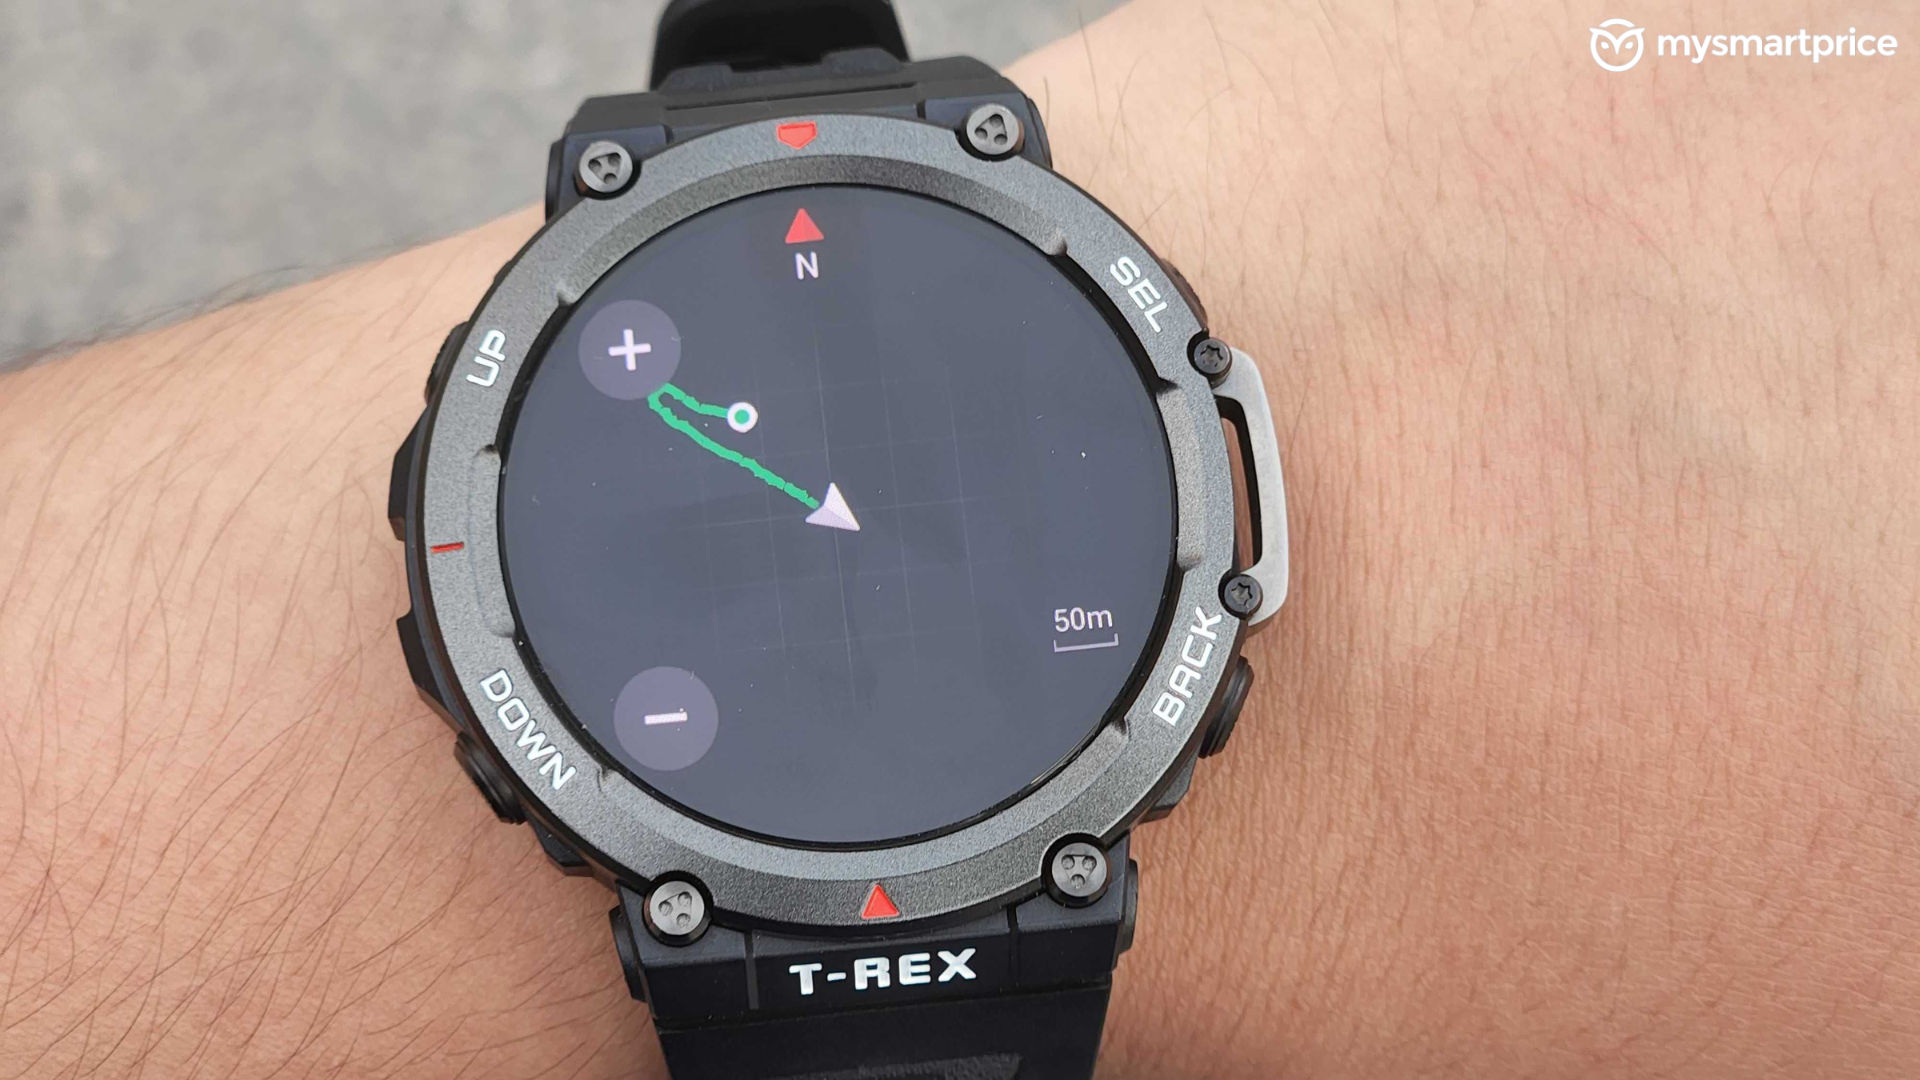 Exclusive] Amazfit T-Rex Pro specs and design leaked, launch seems